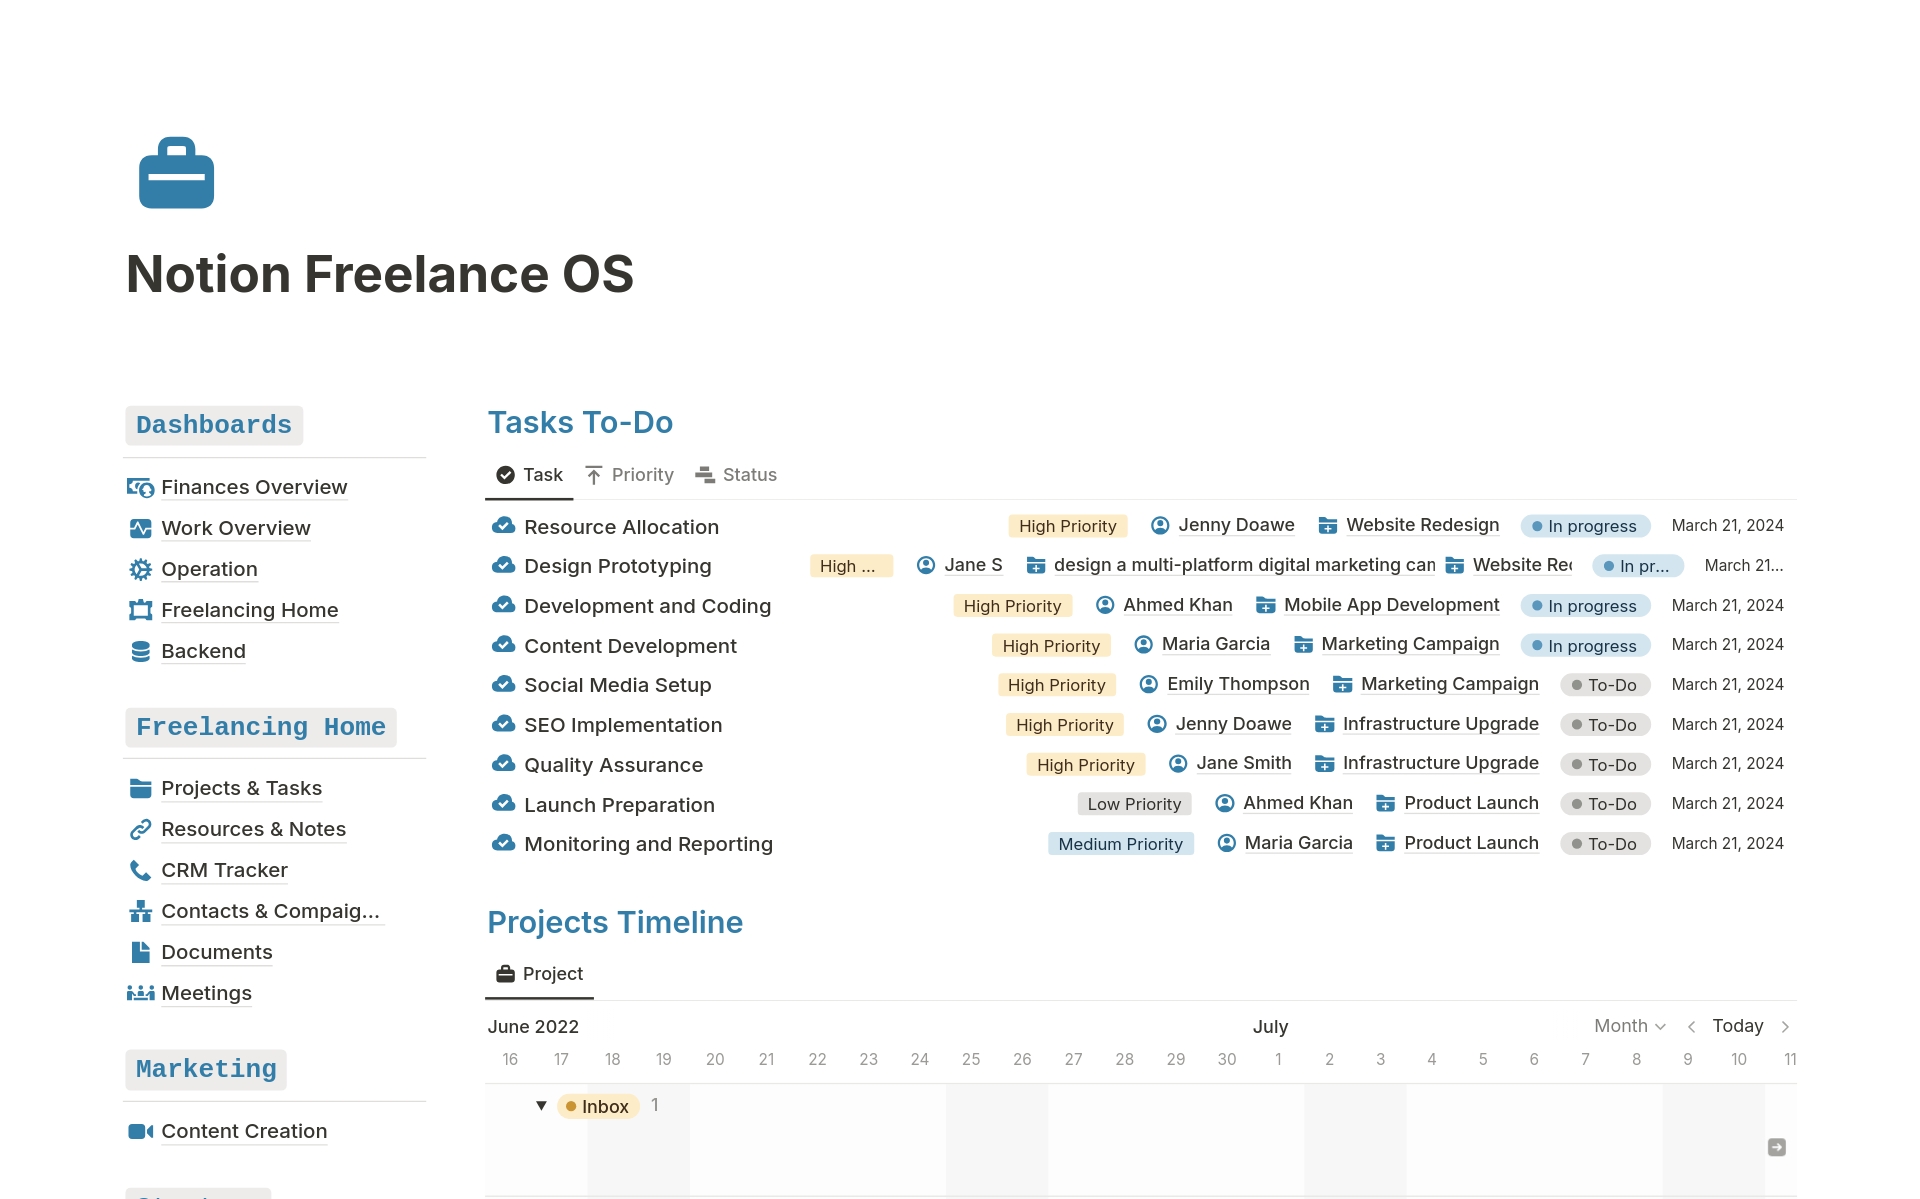 Vista previa de una plantilla para Freelance OS